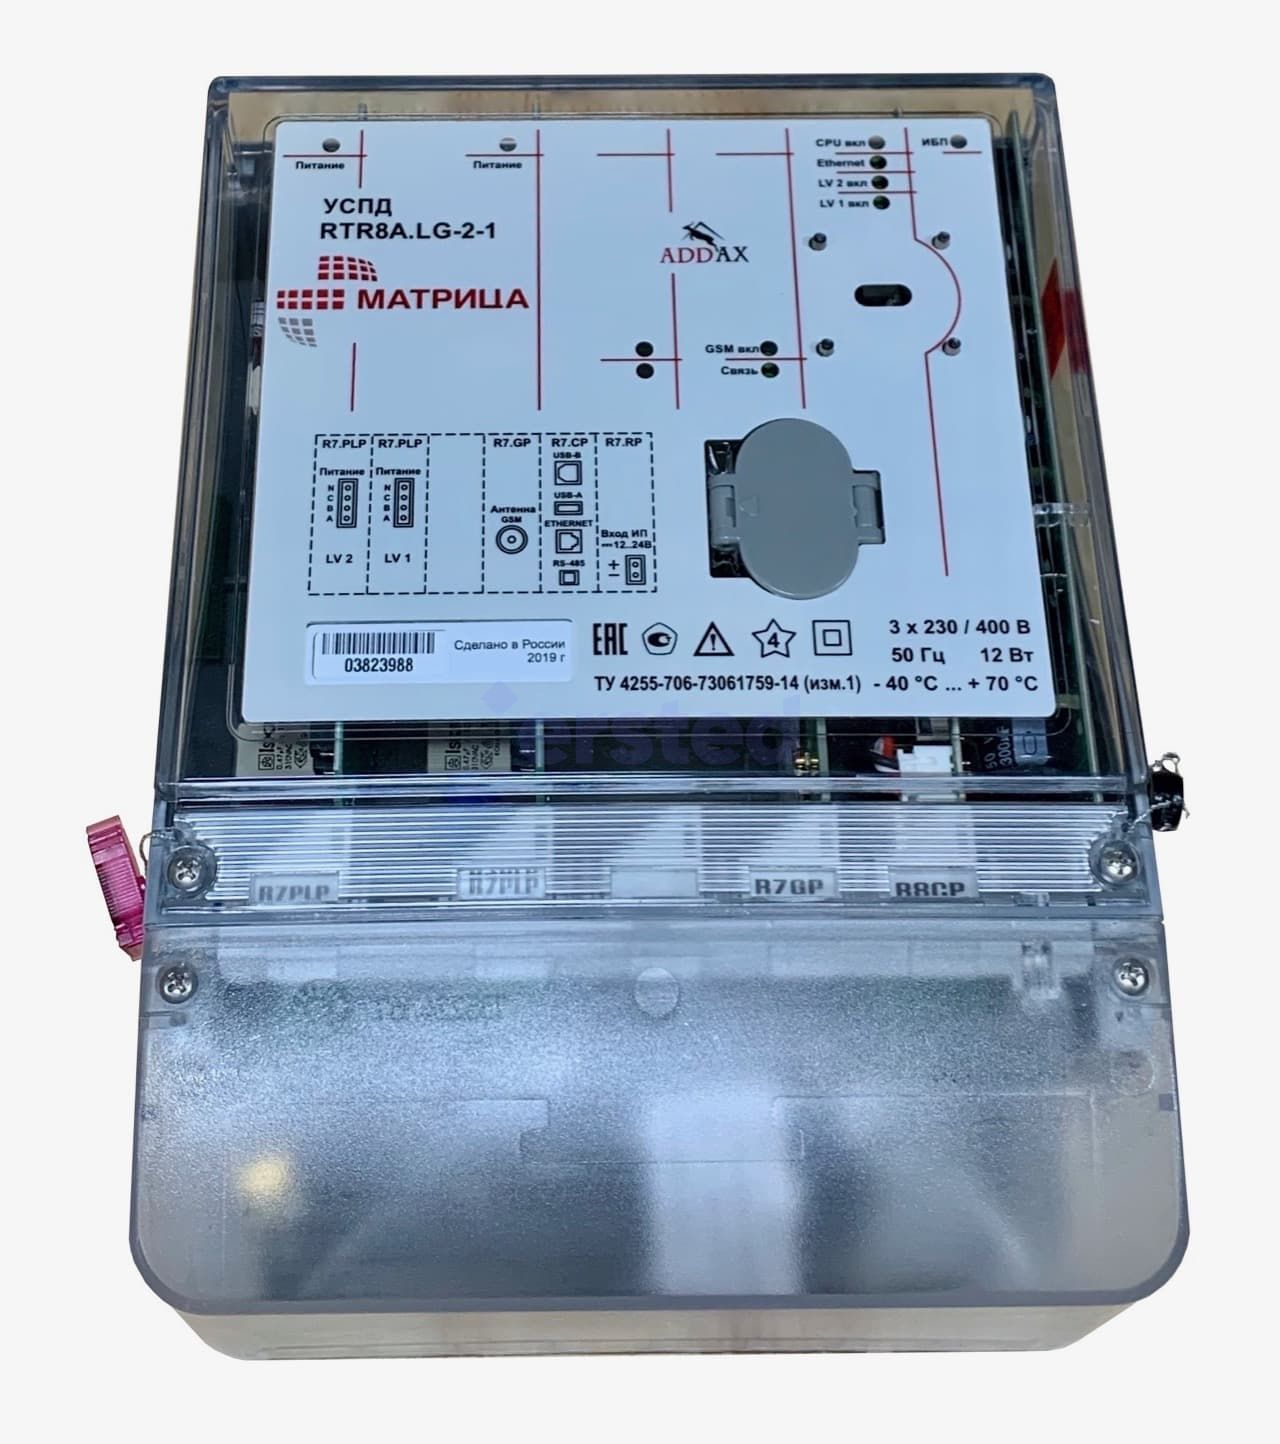 RTR 8A.LG-2-1 (2-секции), PLC (FSK/S-FSK/OFDM), Ethernet, GPRS, USB, RS-485 Маршрутизатор матрица, фото 